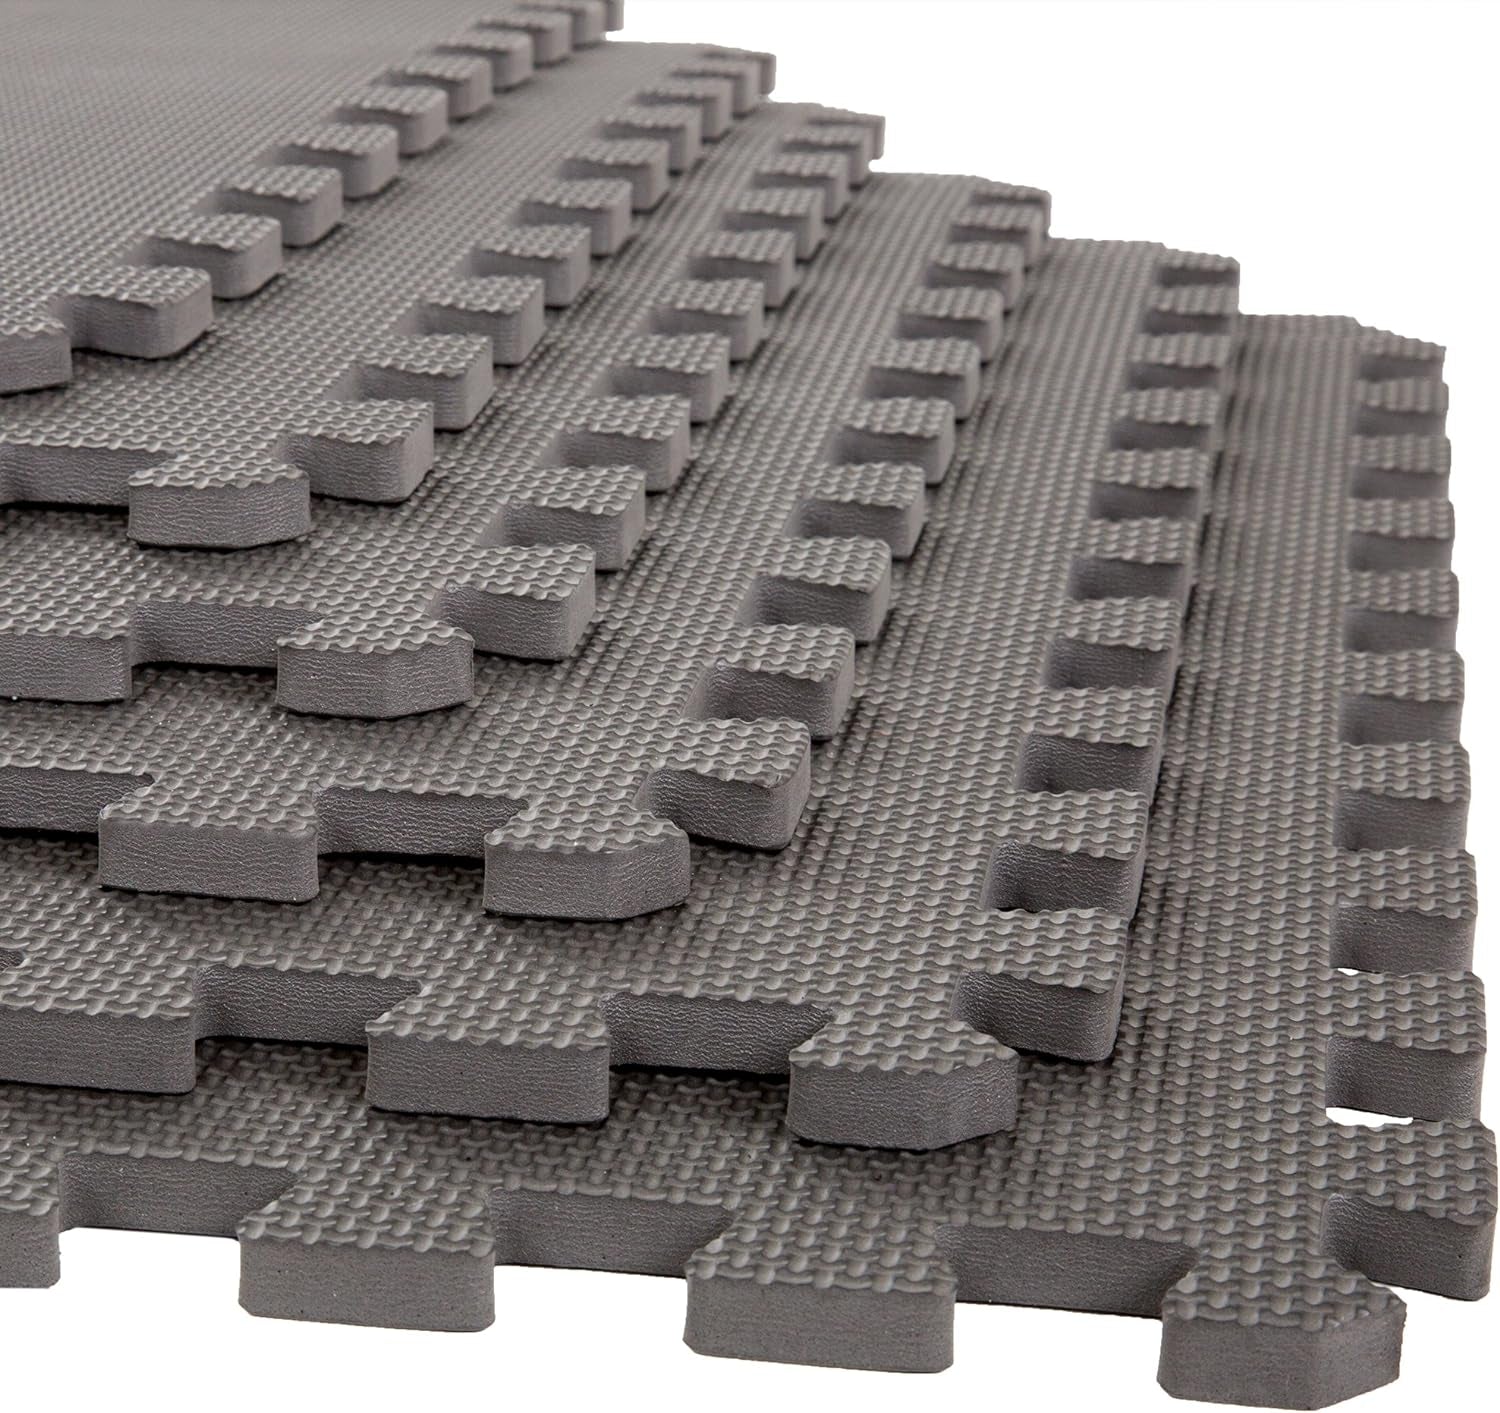 EVA Foam Mat Tiles 4-Pack - 16 SQ FT of Interlocking Padding for Garage, Playroom, or Gym Flooring - Workout Mat or Baby Playmat by  (Black)